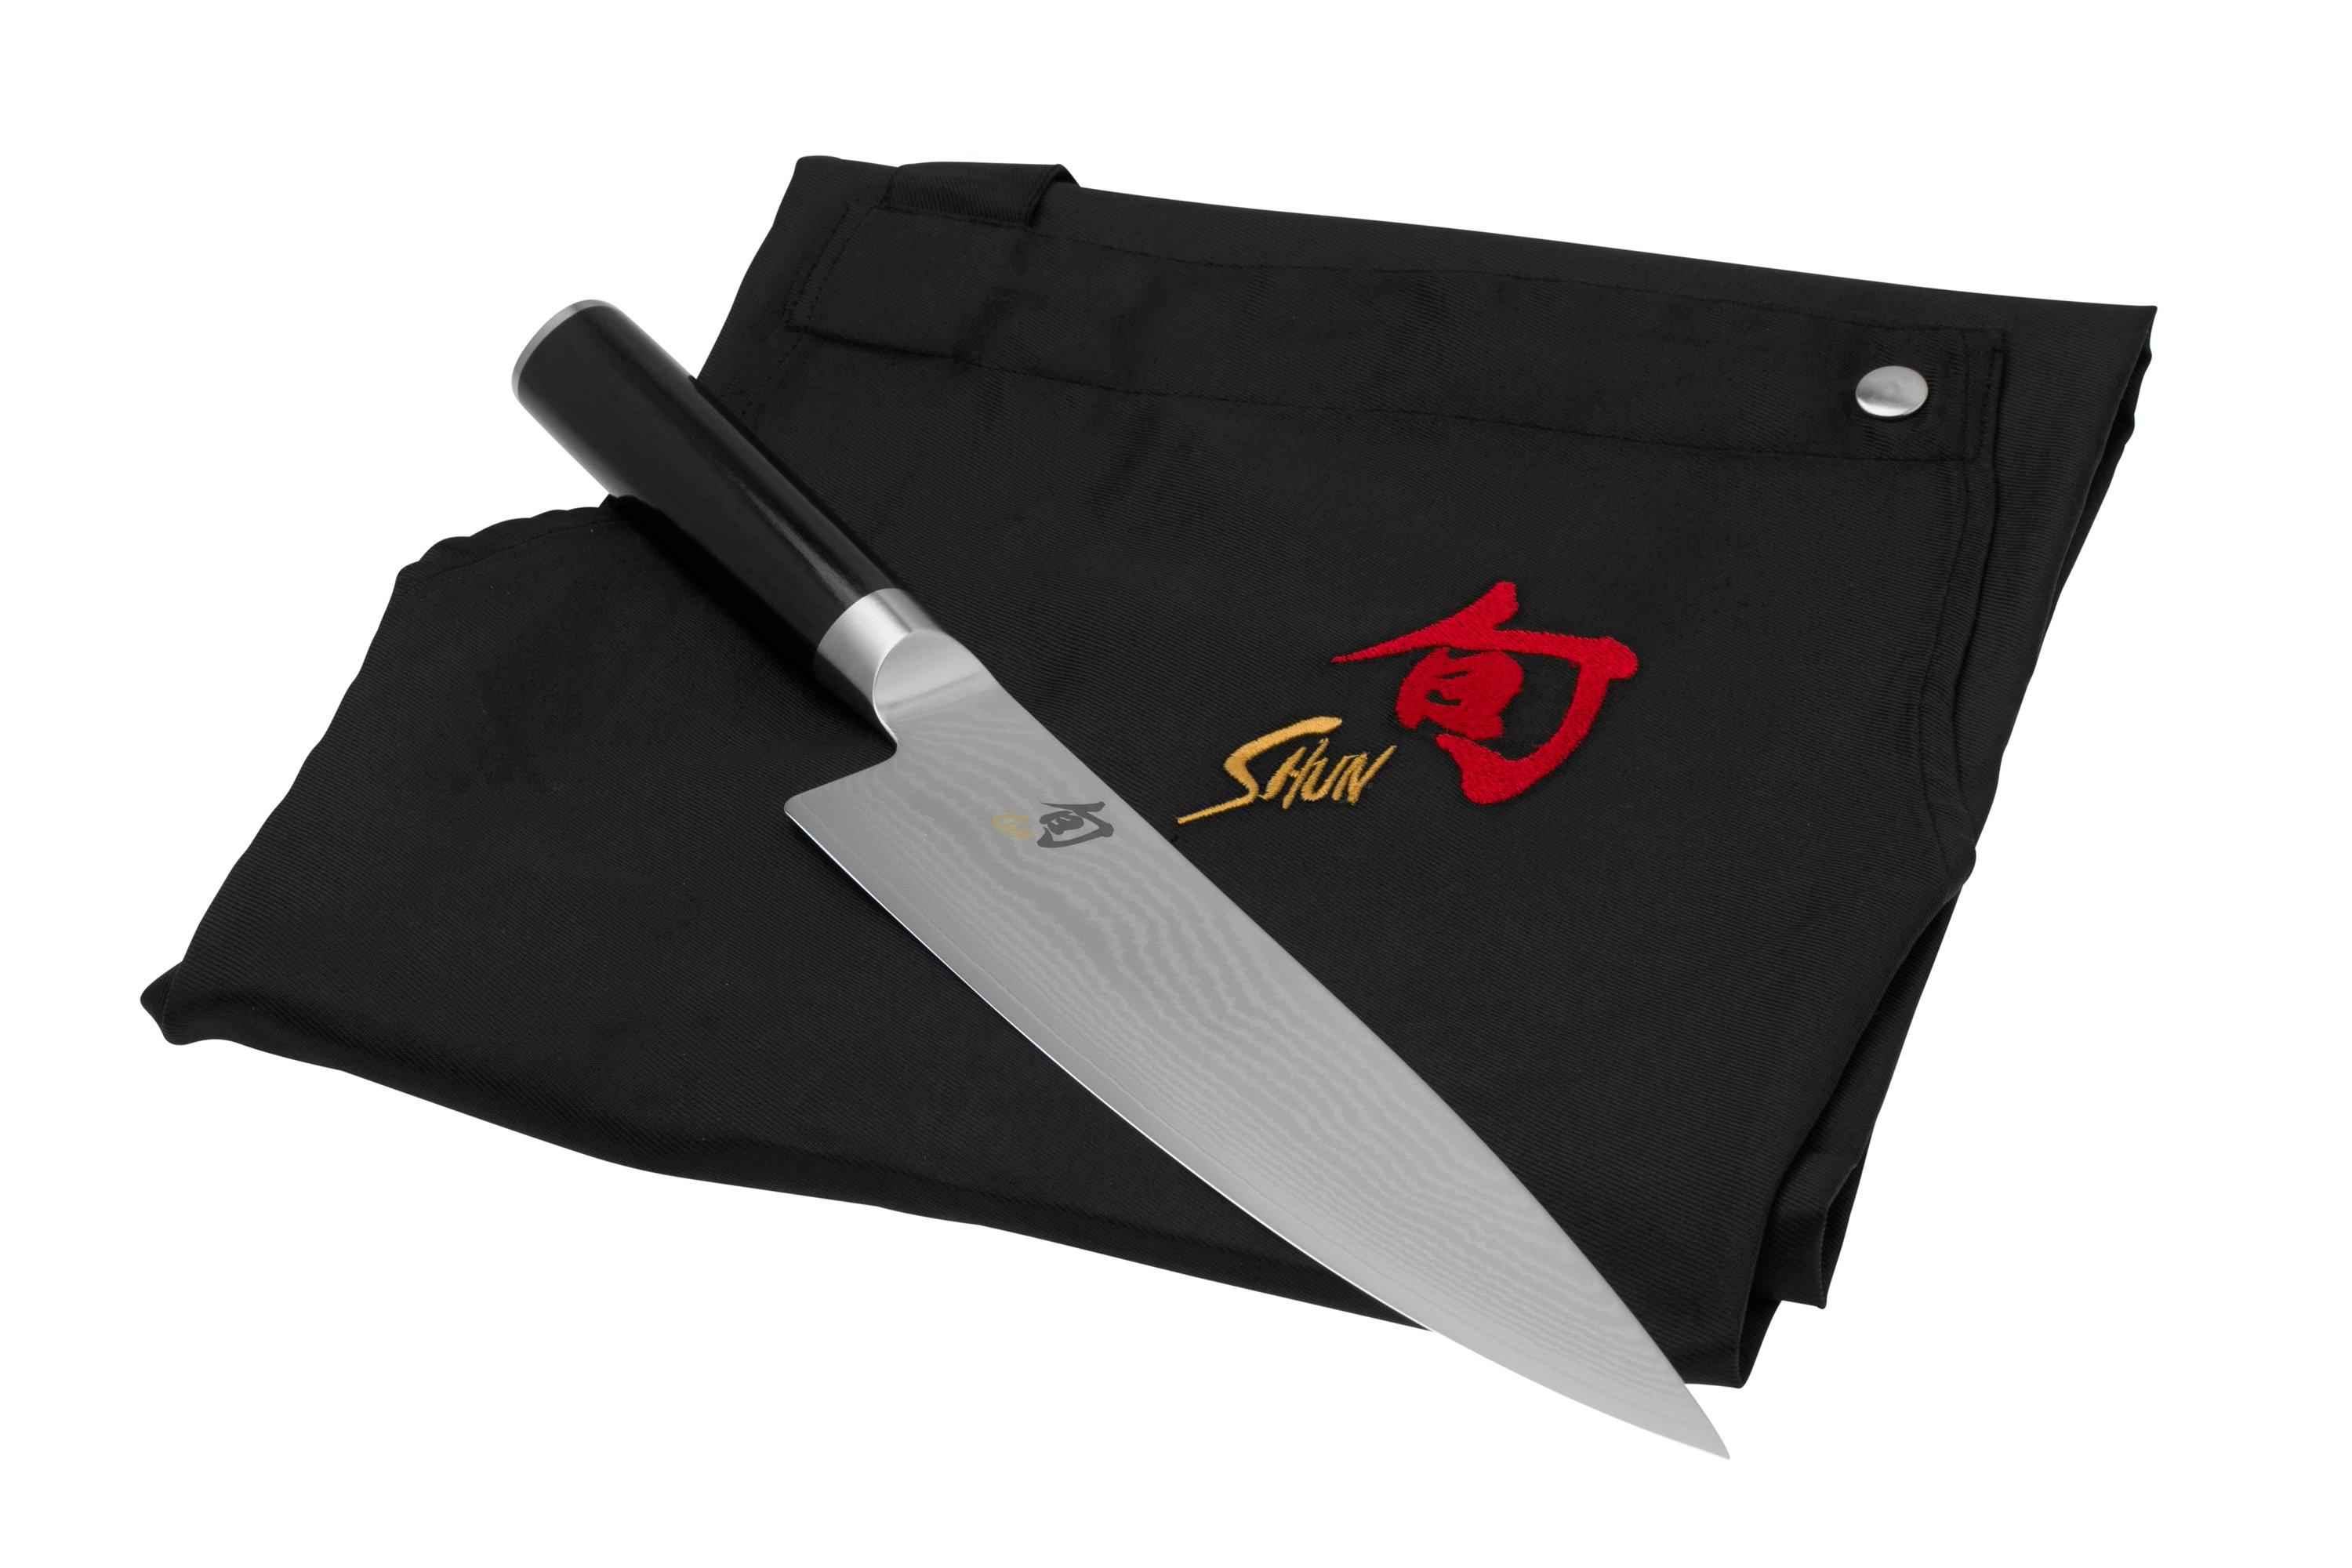 Kai Shun Classic Dm W23 Chef S Knife 20 Cm Apron Advantageously Shopping At